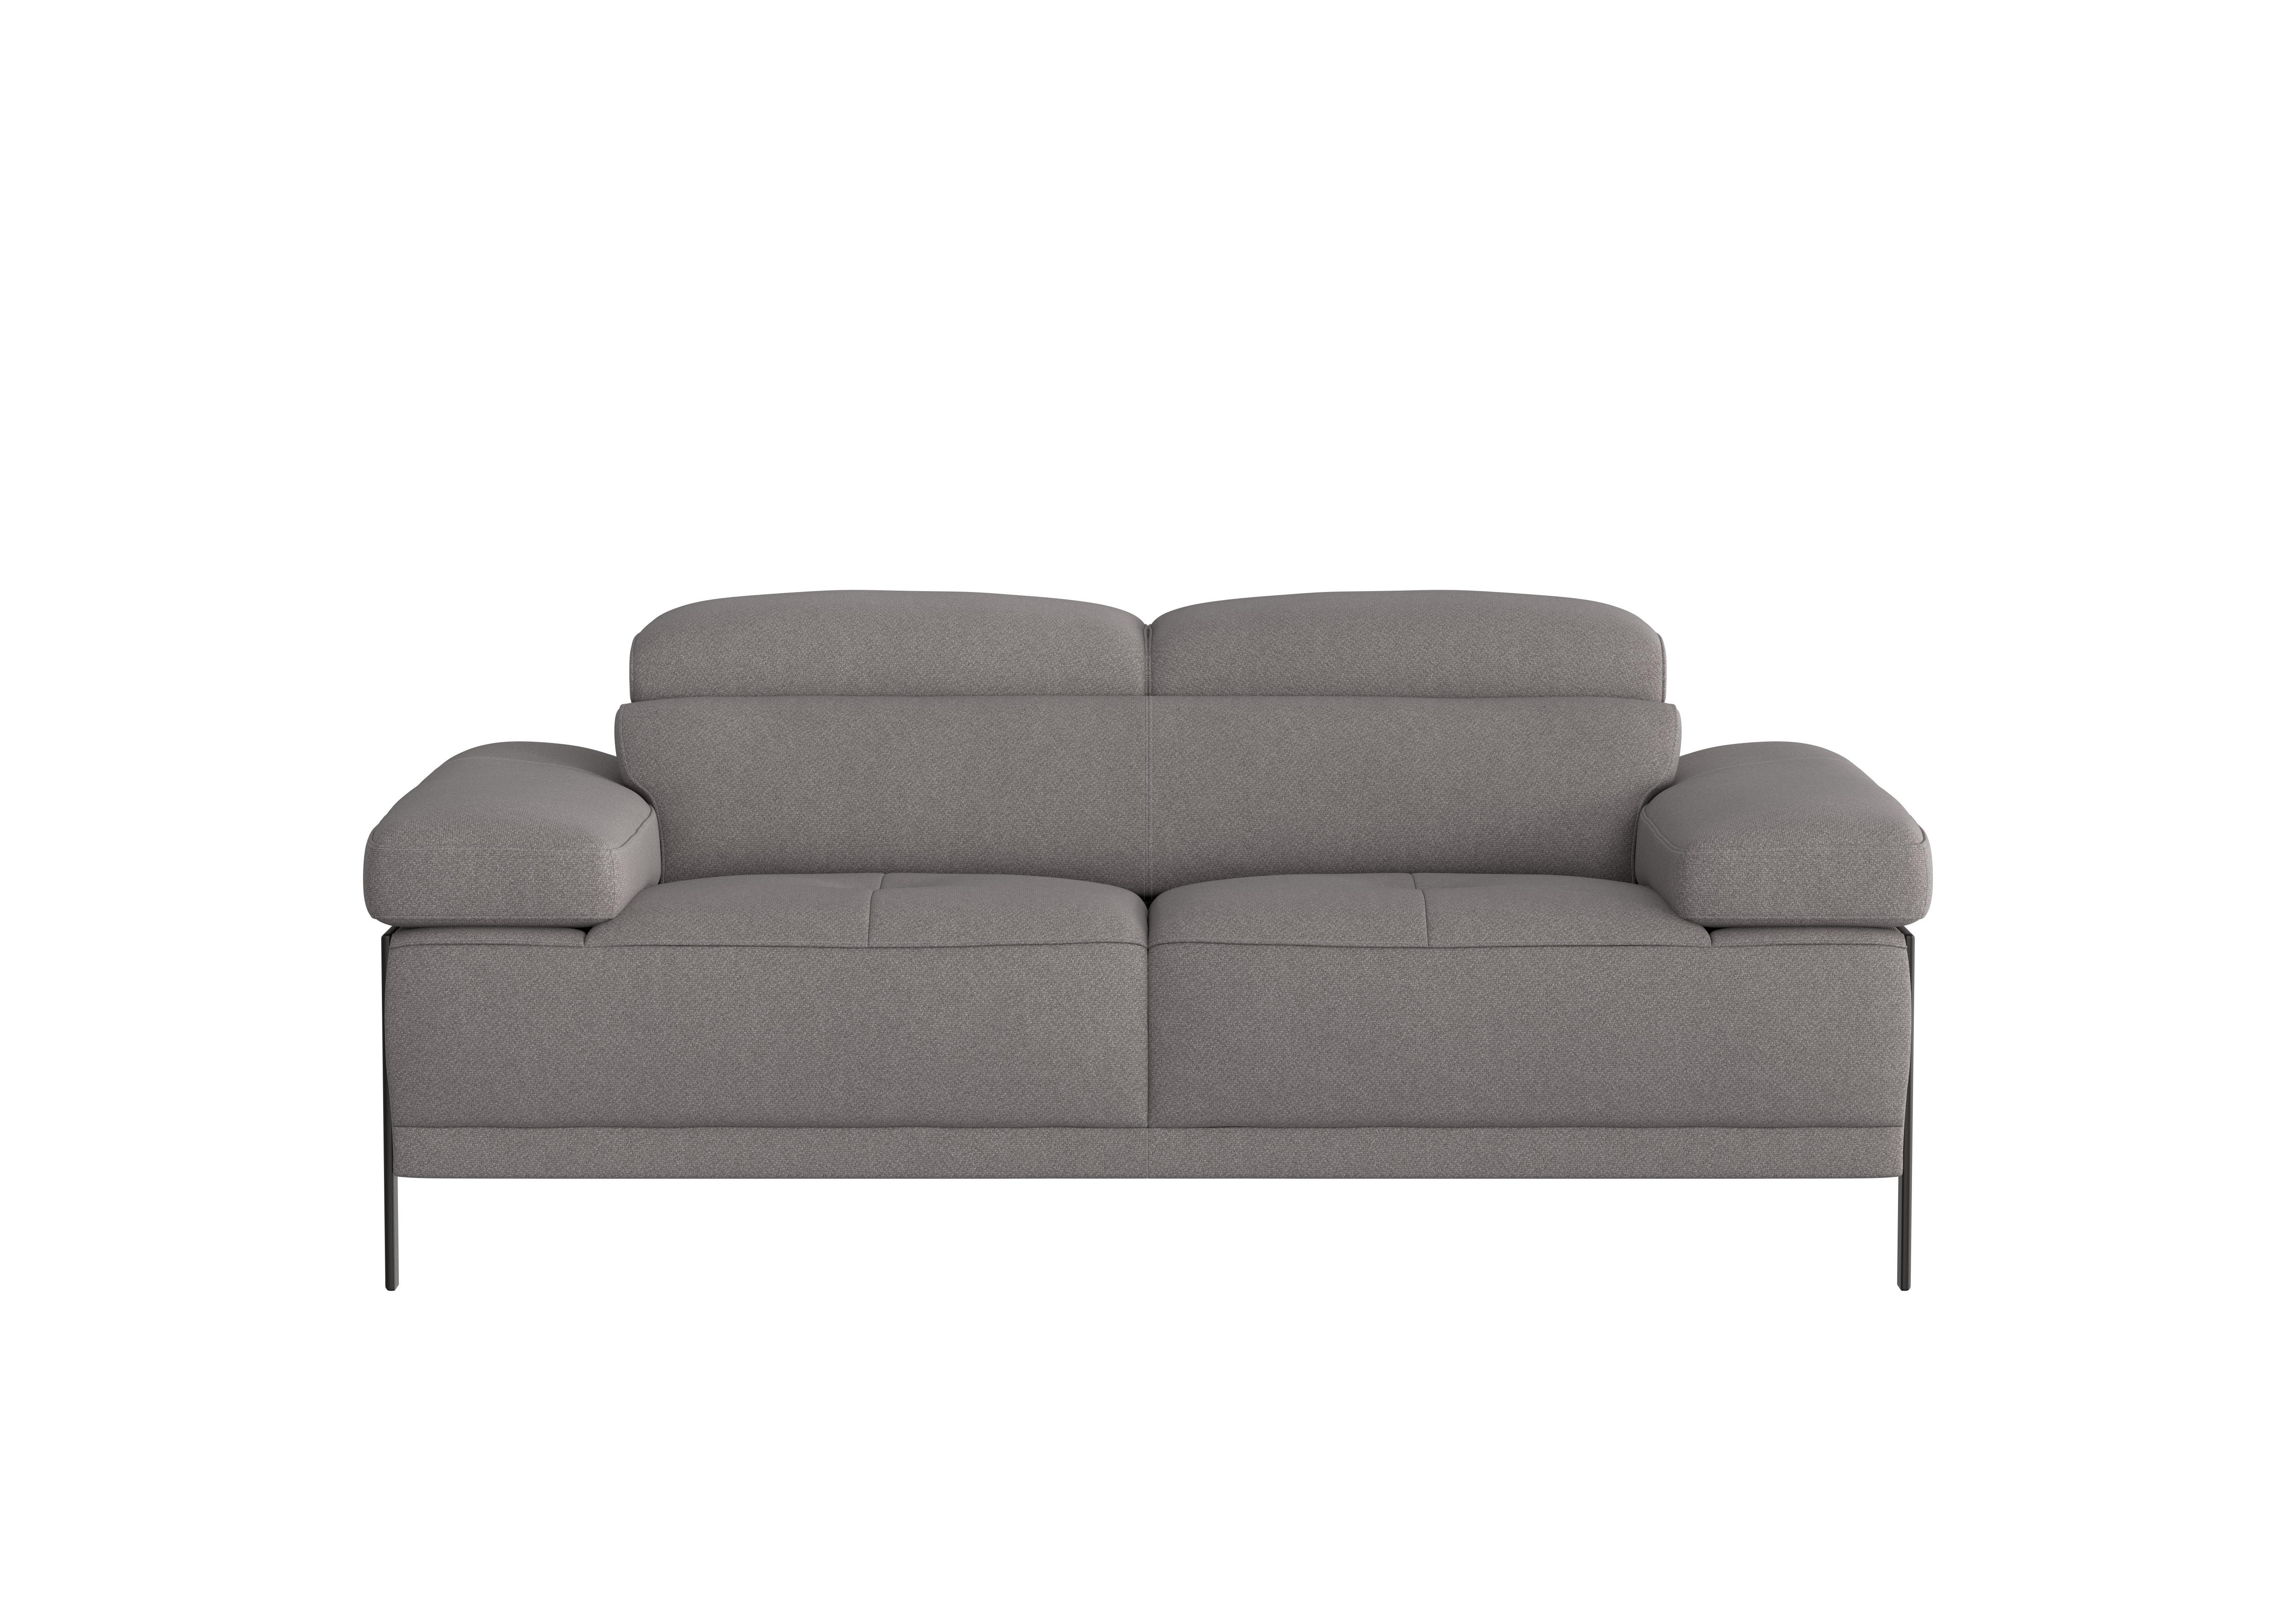 Theron 2 Seater Fabric Sofa in Coupe Grigio Topo 609 Ti Ft on Furniture Village